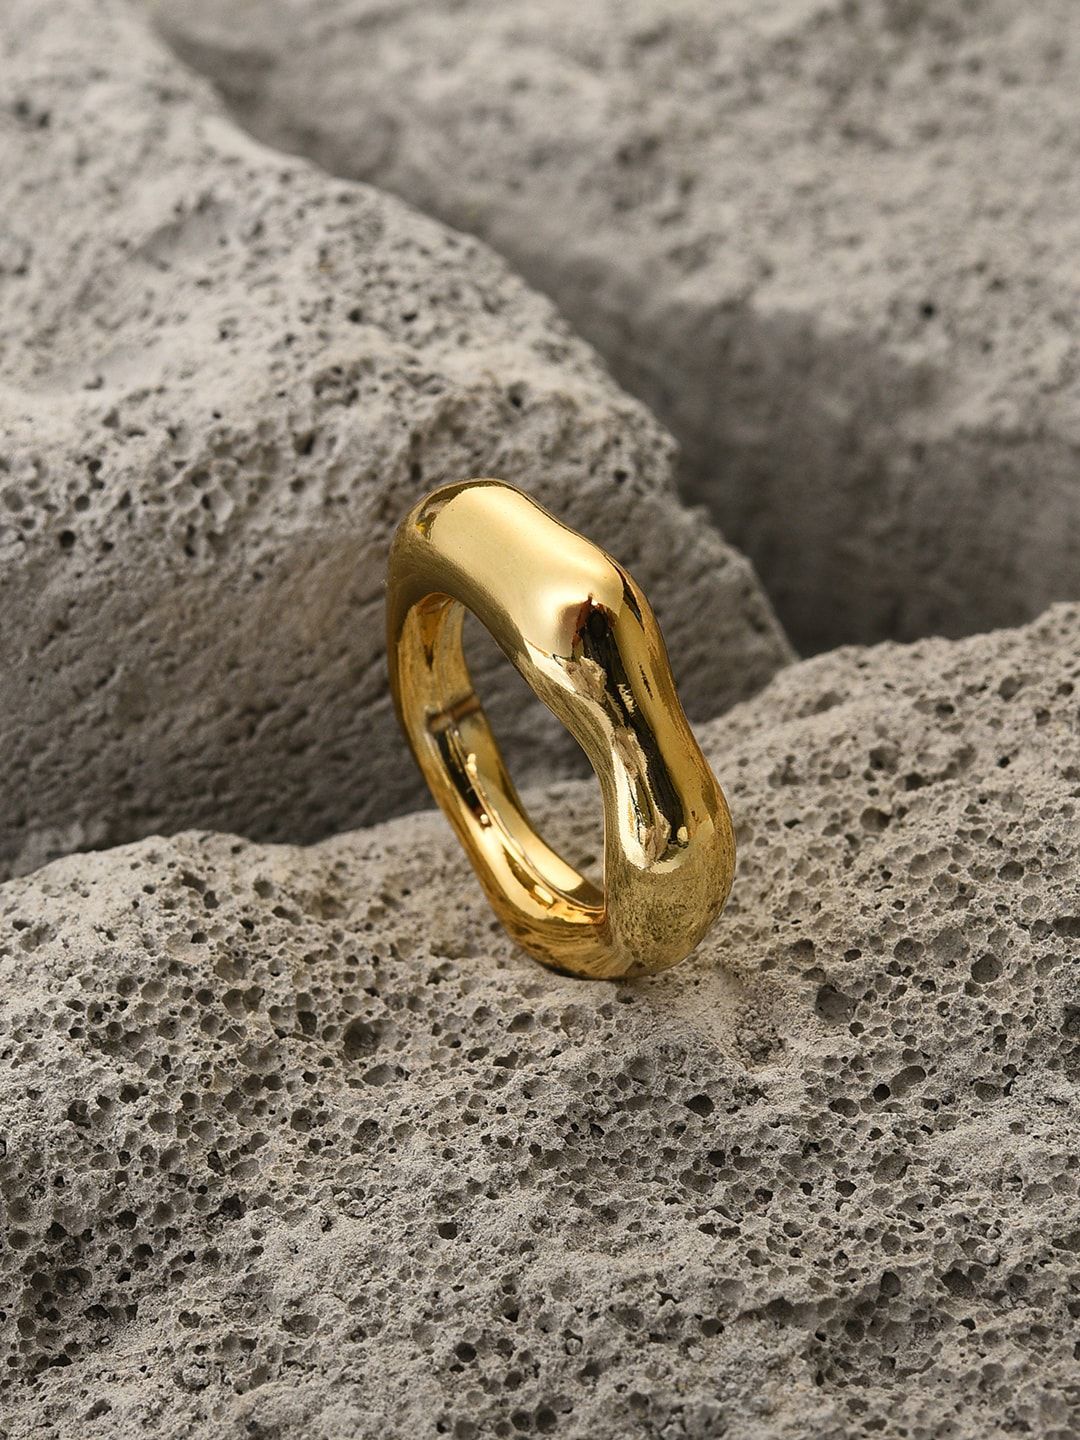 SOHI Gold-Plated Designer Finger Ring Price in India